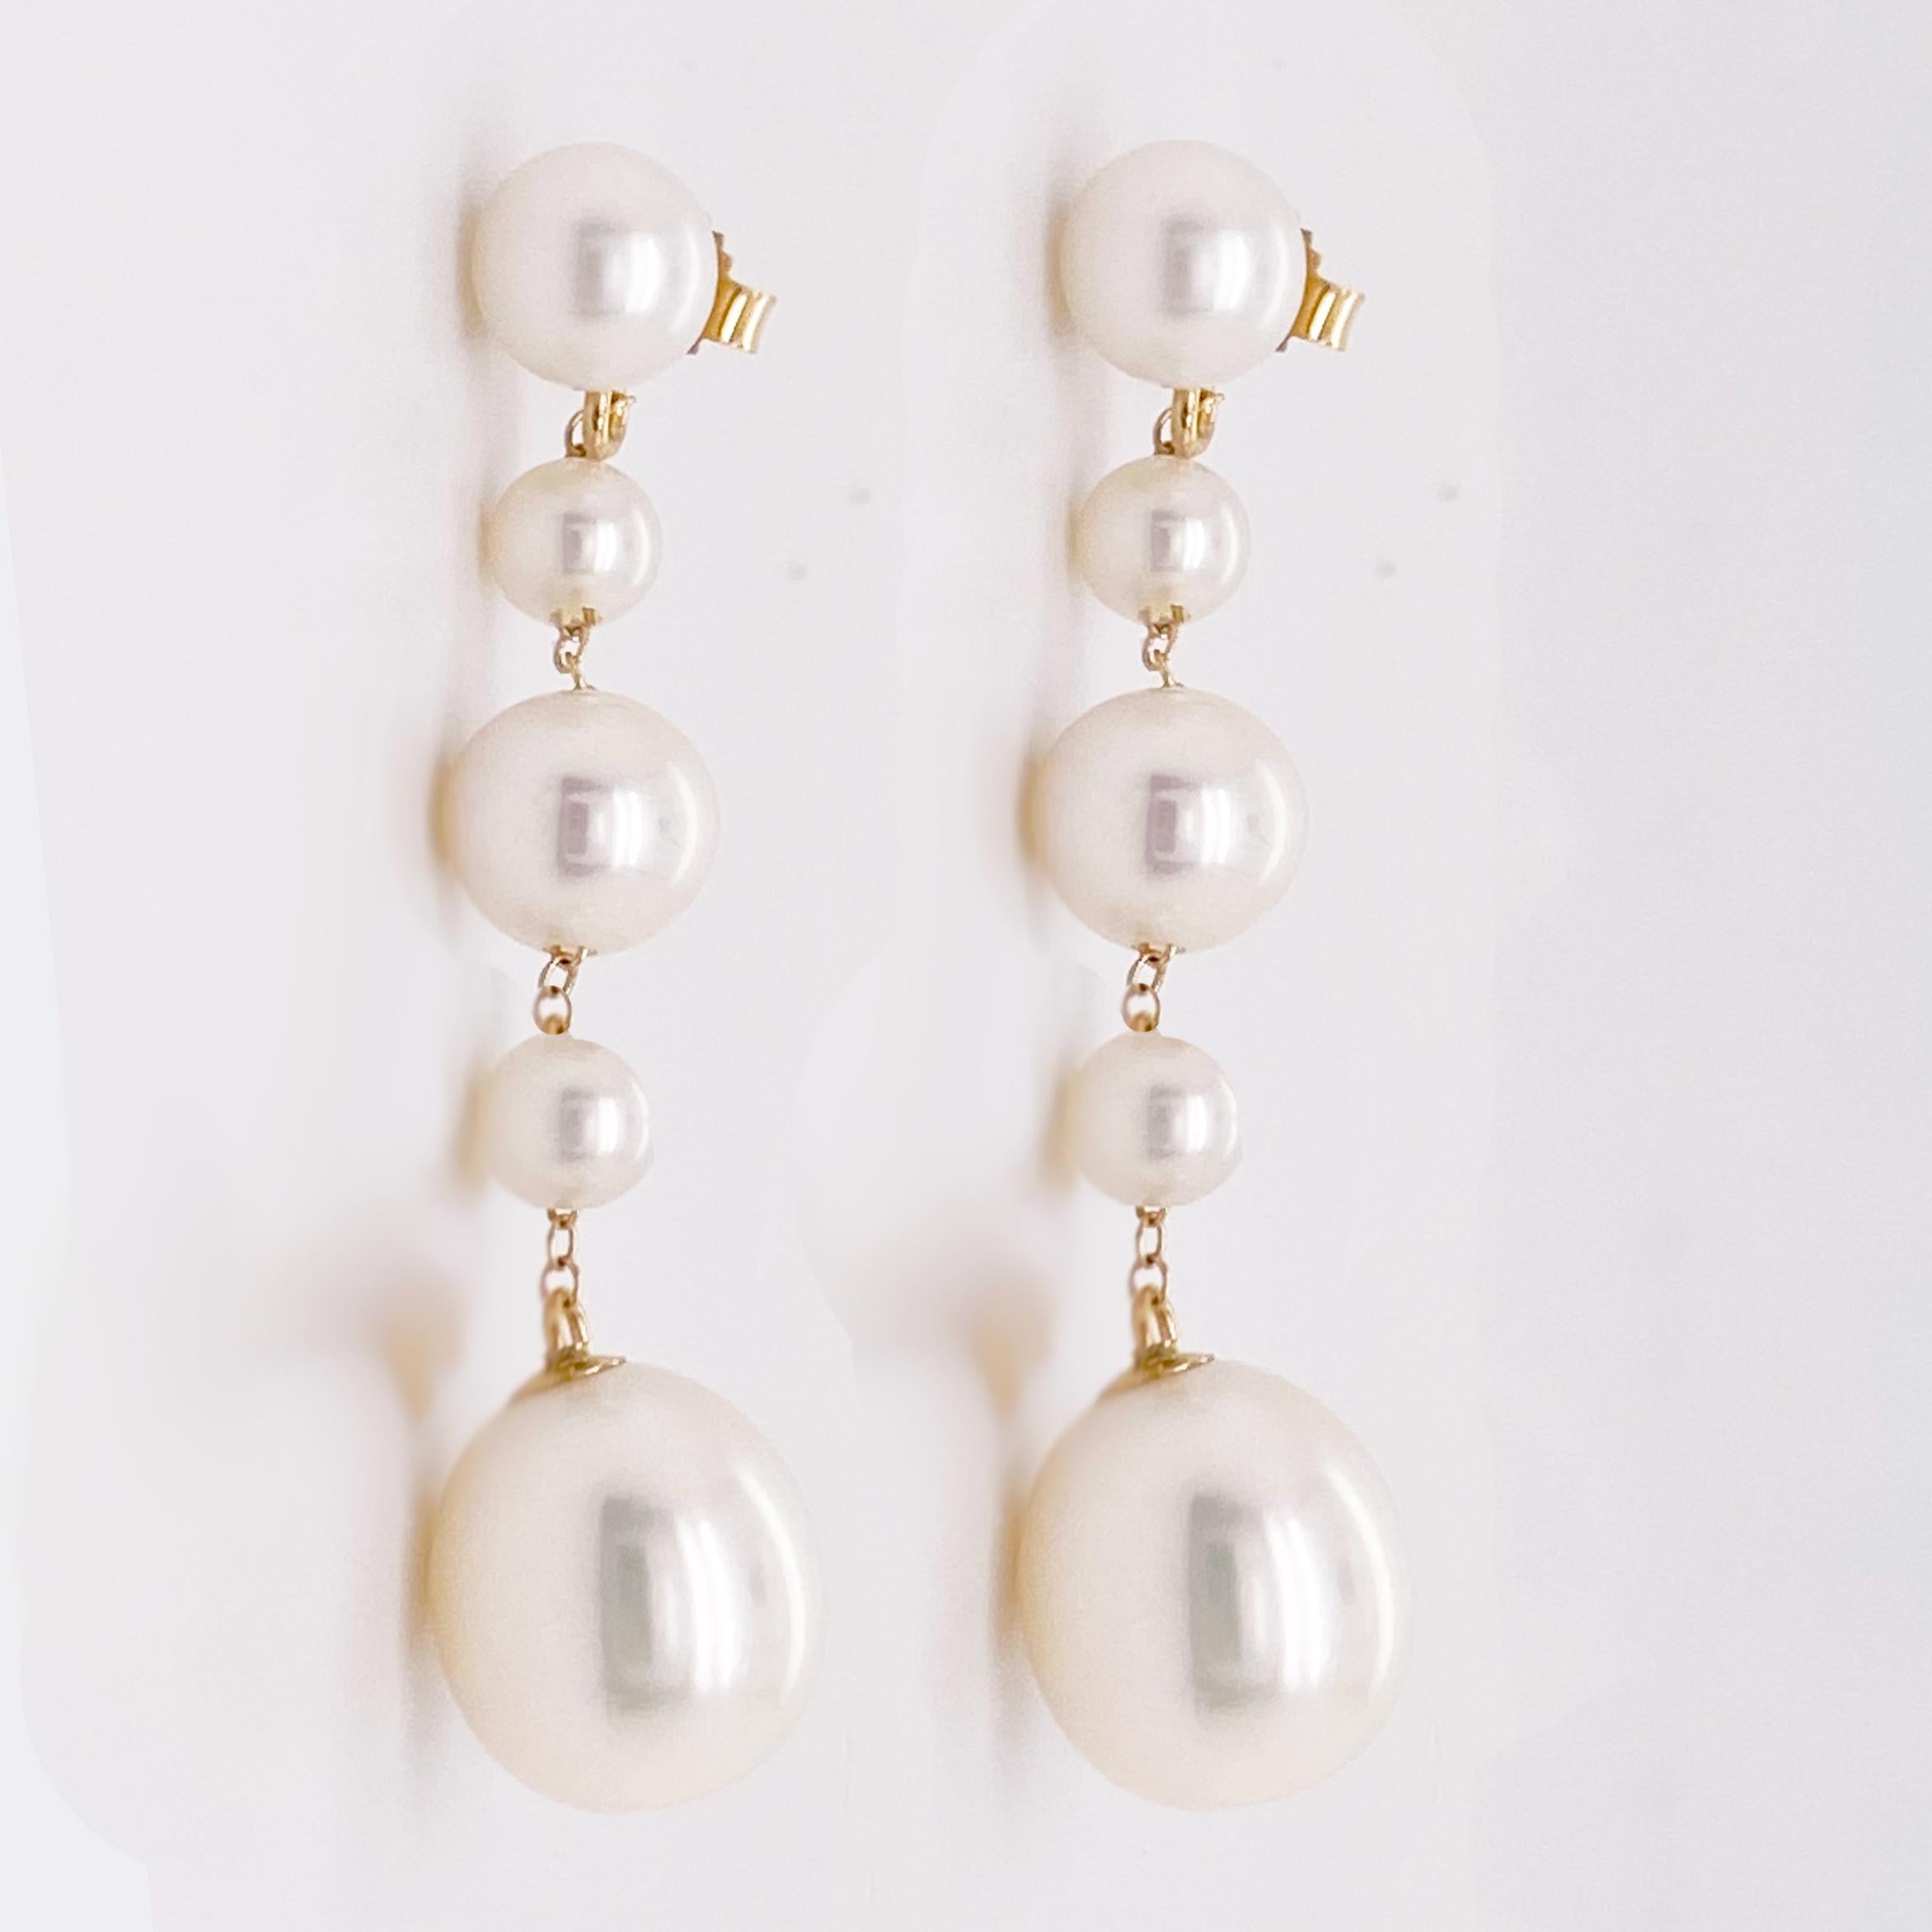 5 pearl drop earrings